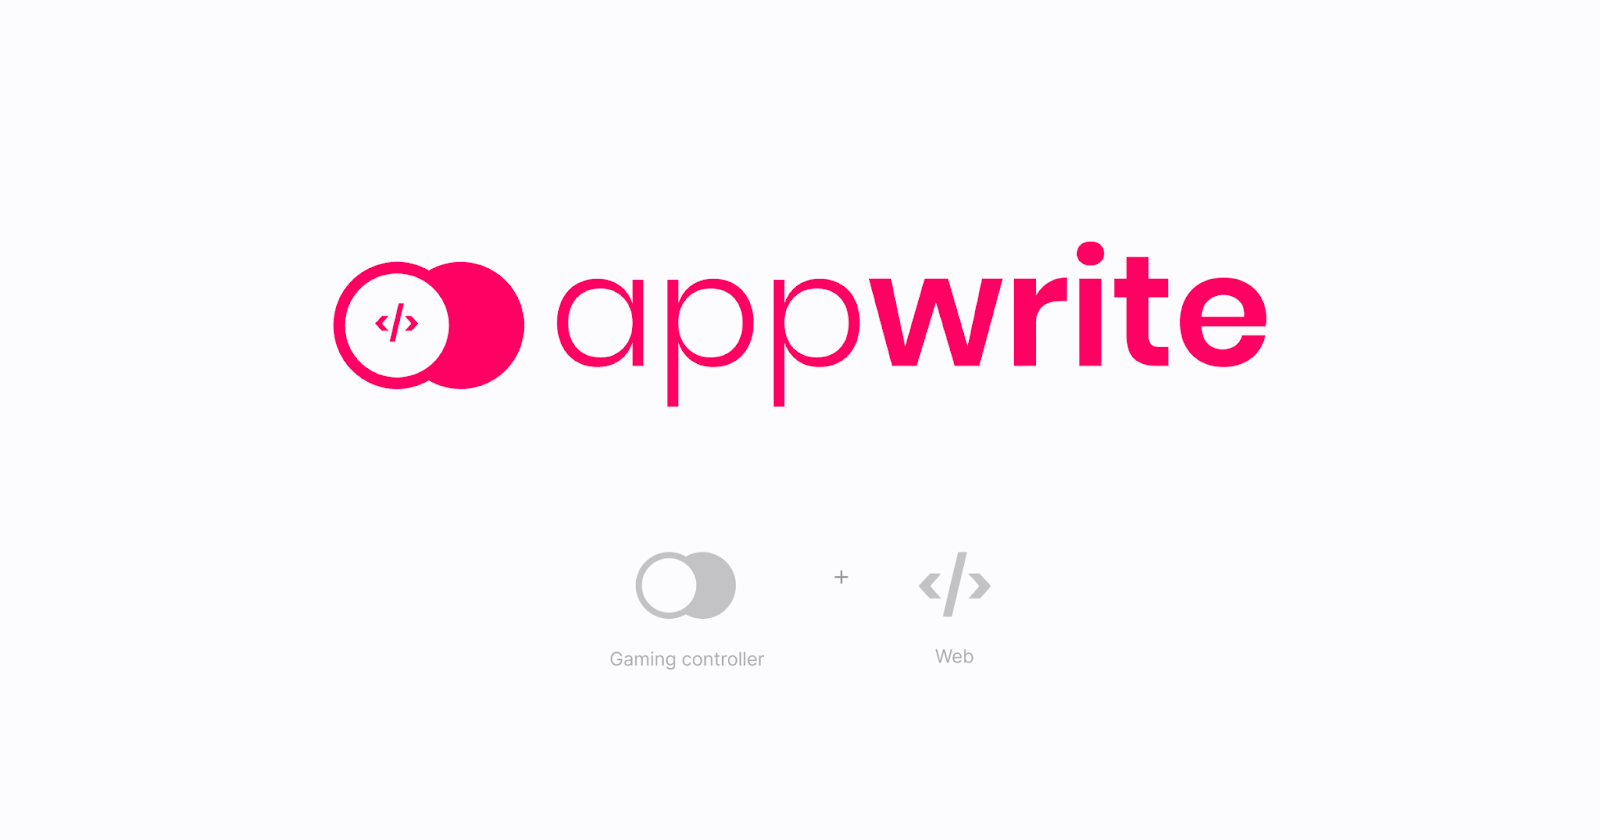 Appwrite's old logo